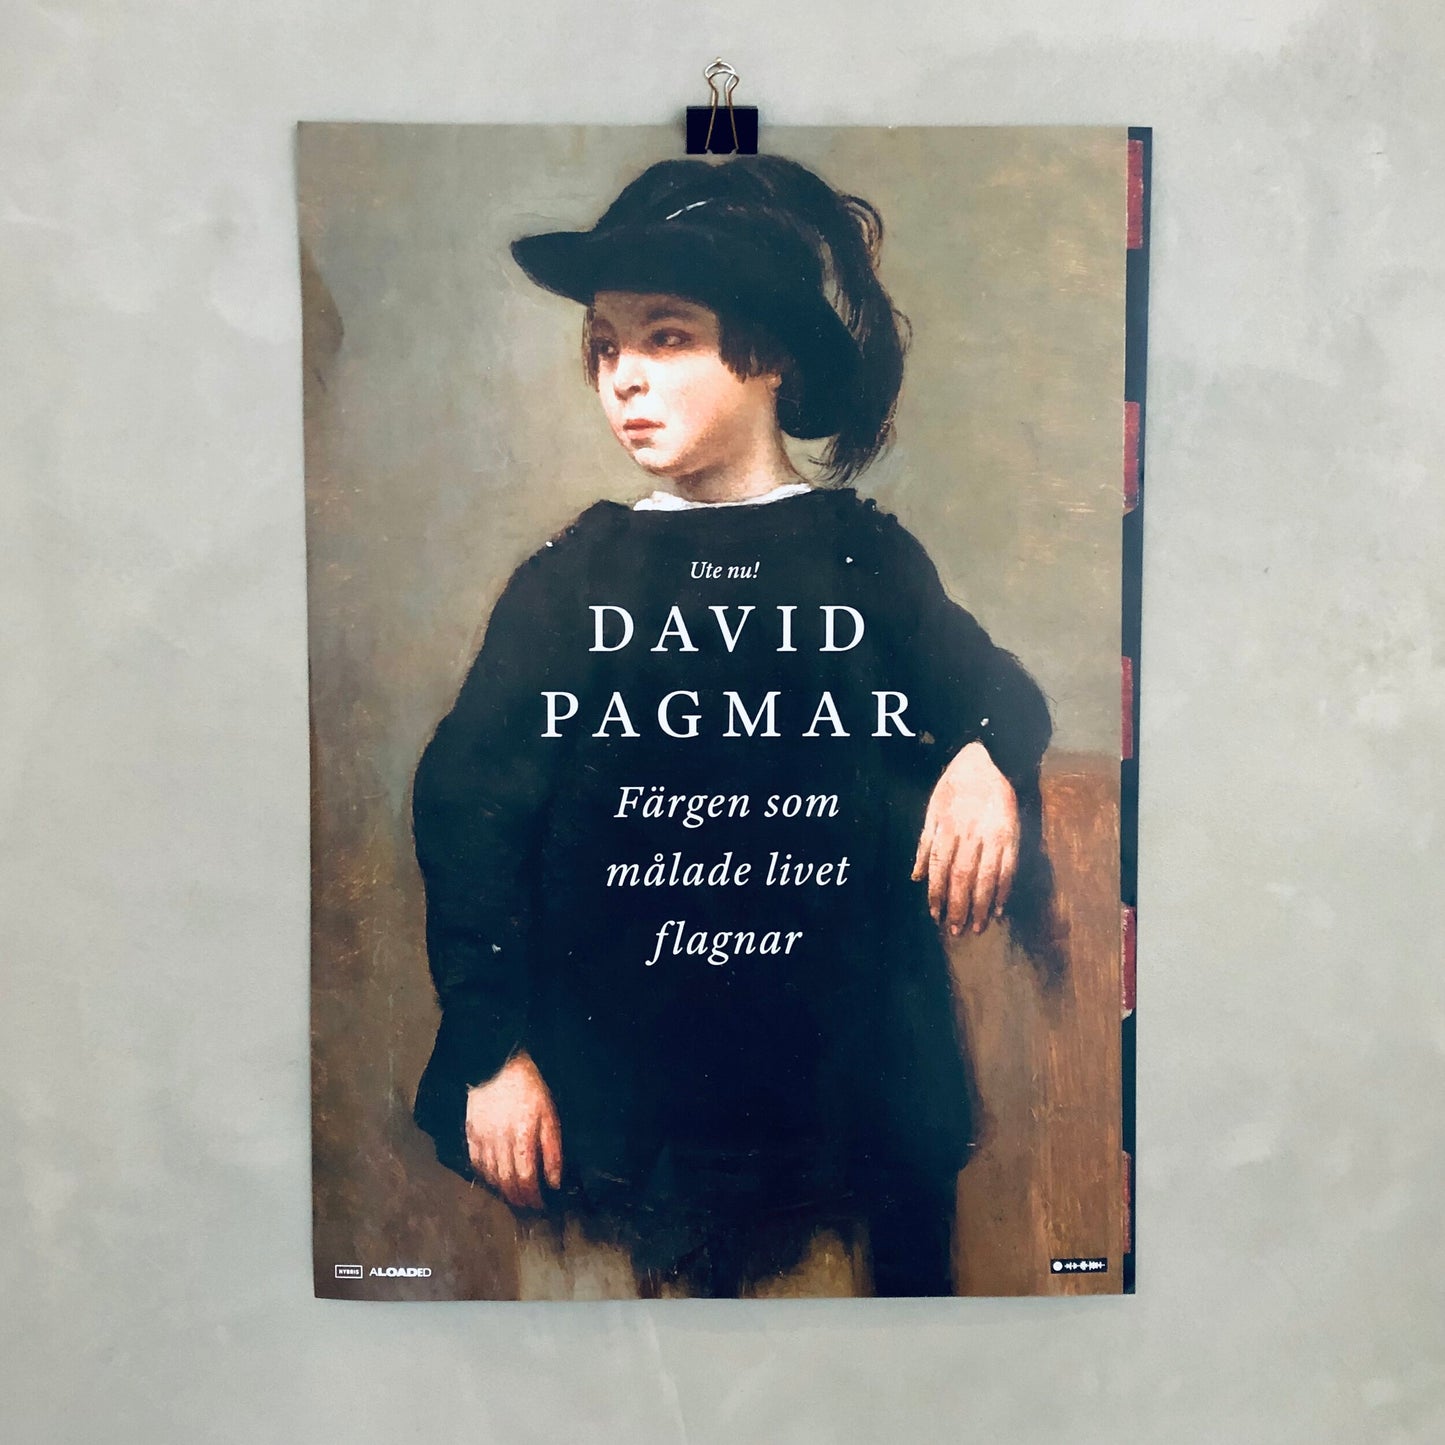 David Pagmar – Färgen som målade livet flagnar promotion poster